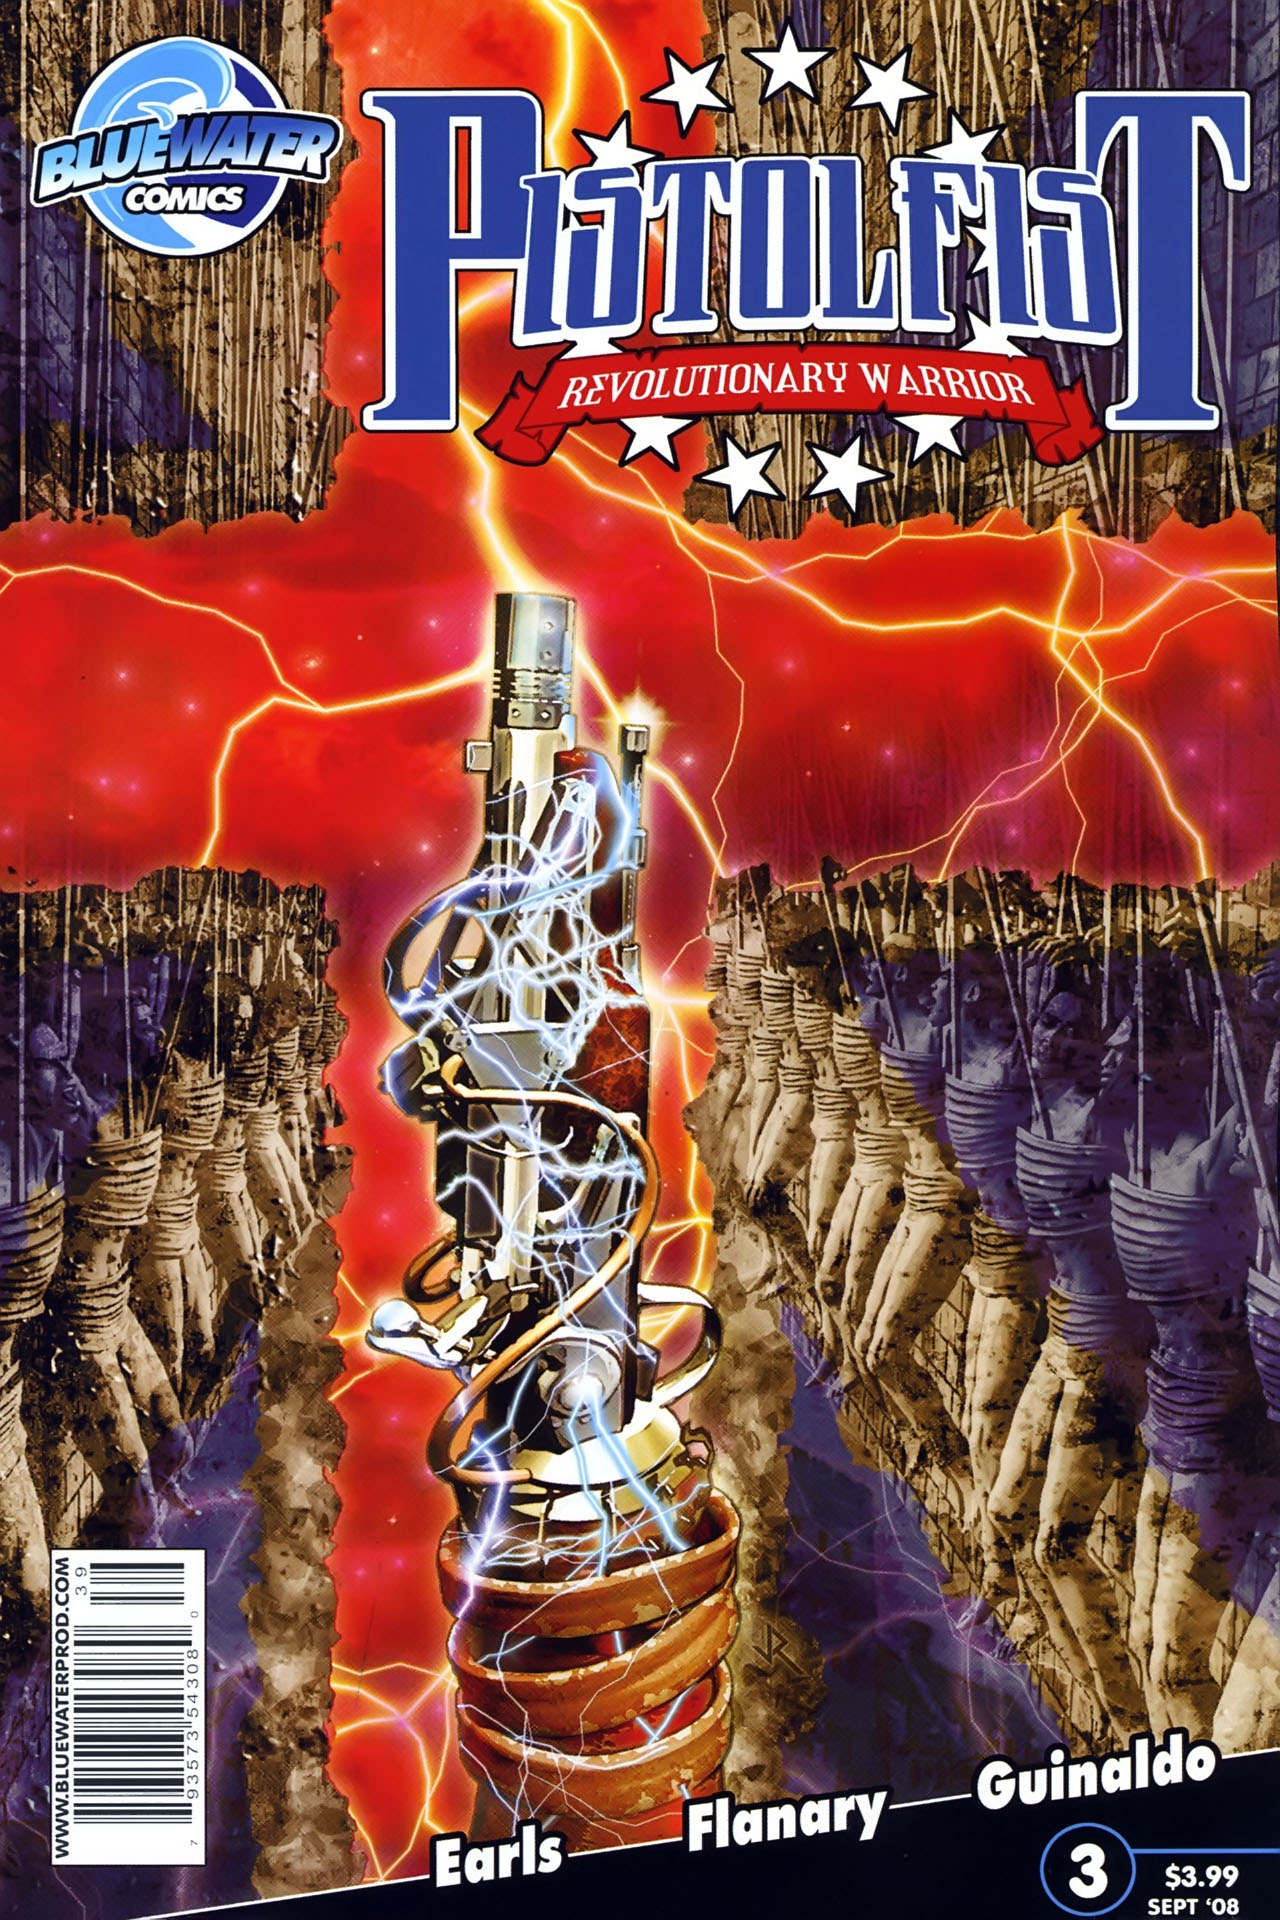 Read online Pistolfist Revolutionary Warrior comic -  Issue #3 - 1